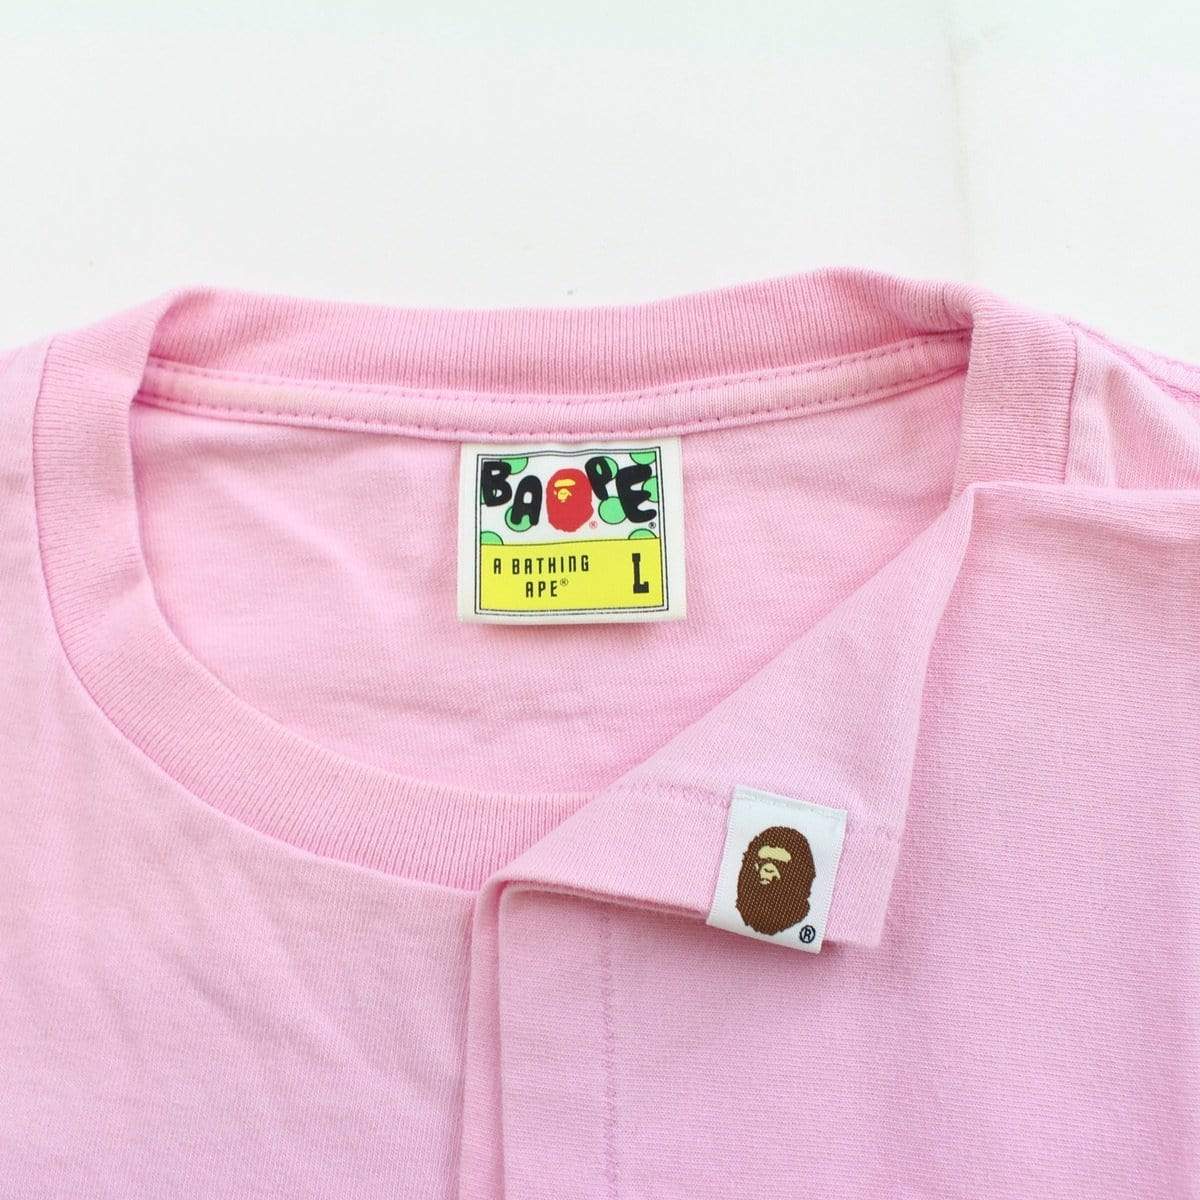 bapesta logo tee baby pink - SaruGeneral